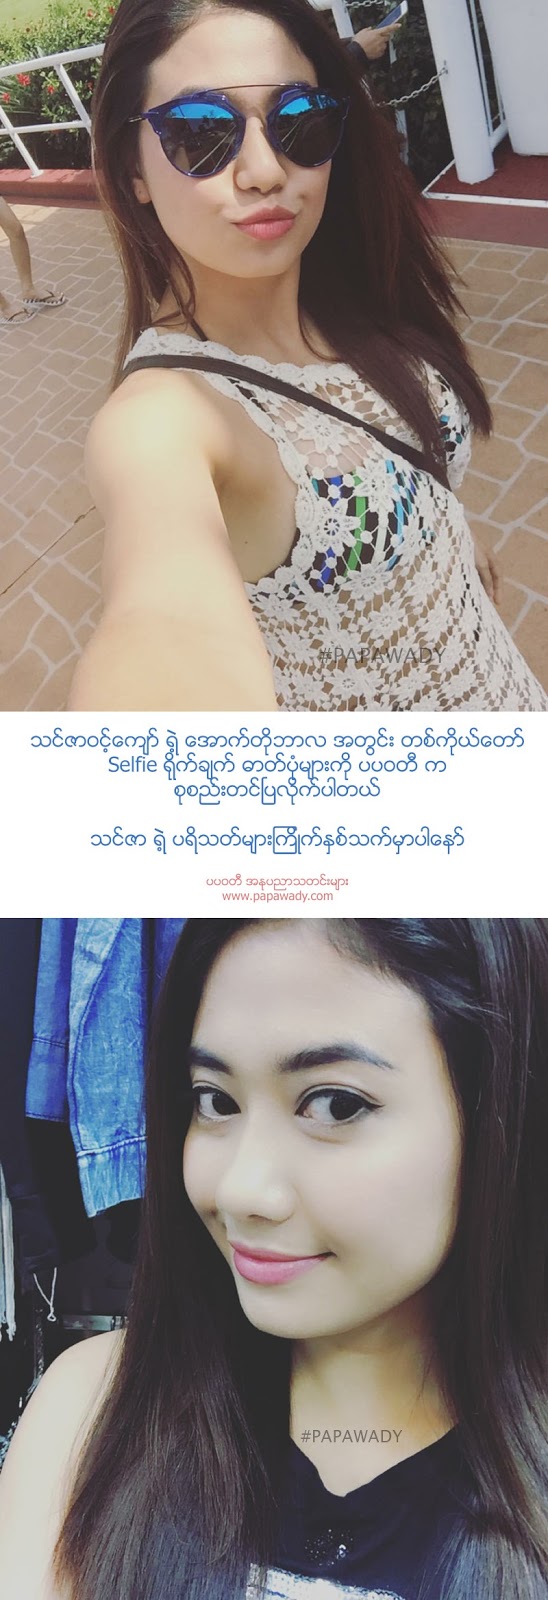 Thinzar Wint Kyaw 11 Selfie Photos Collection Album November